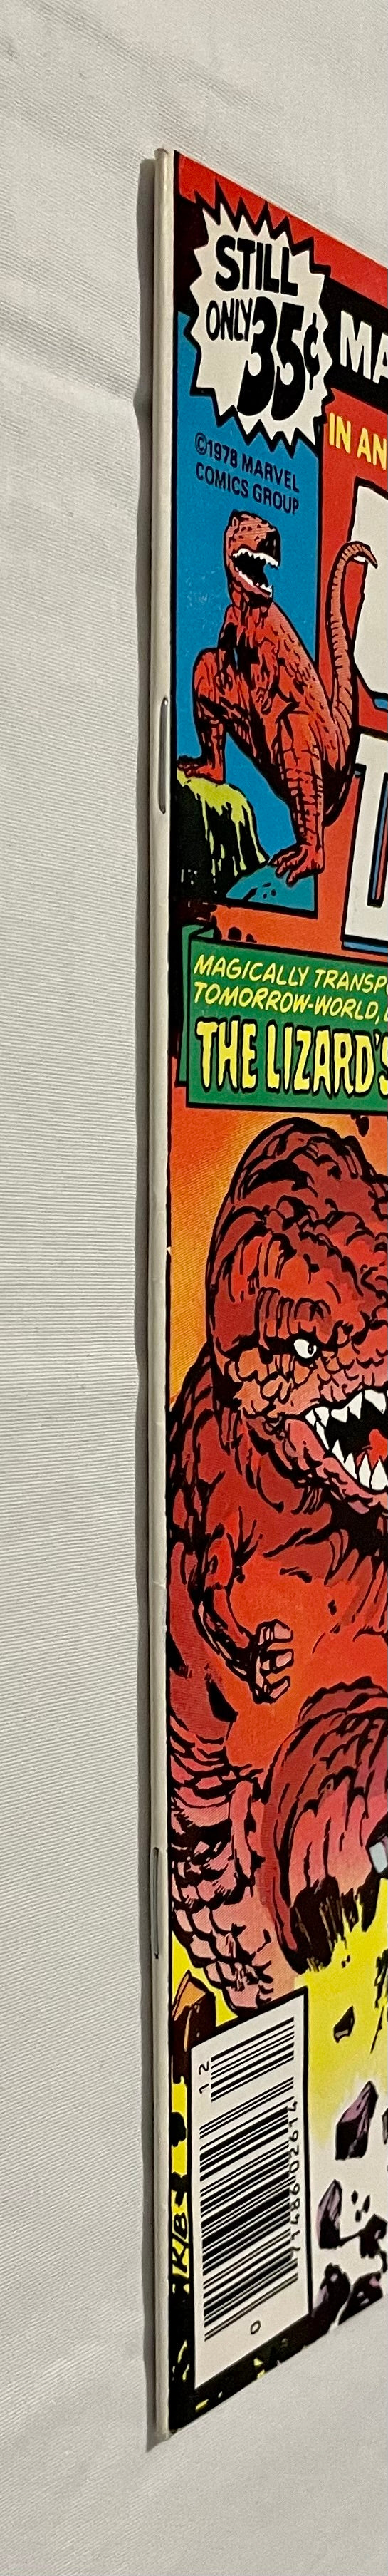 Marvel Comics  Devil Dinosaur #9